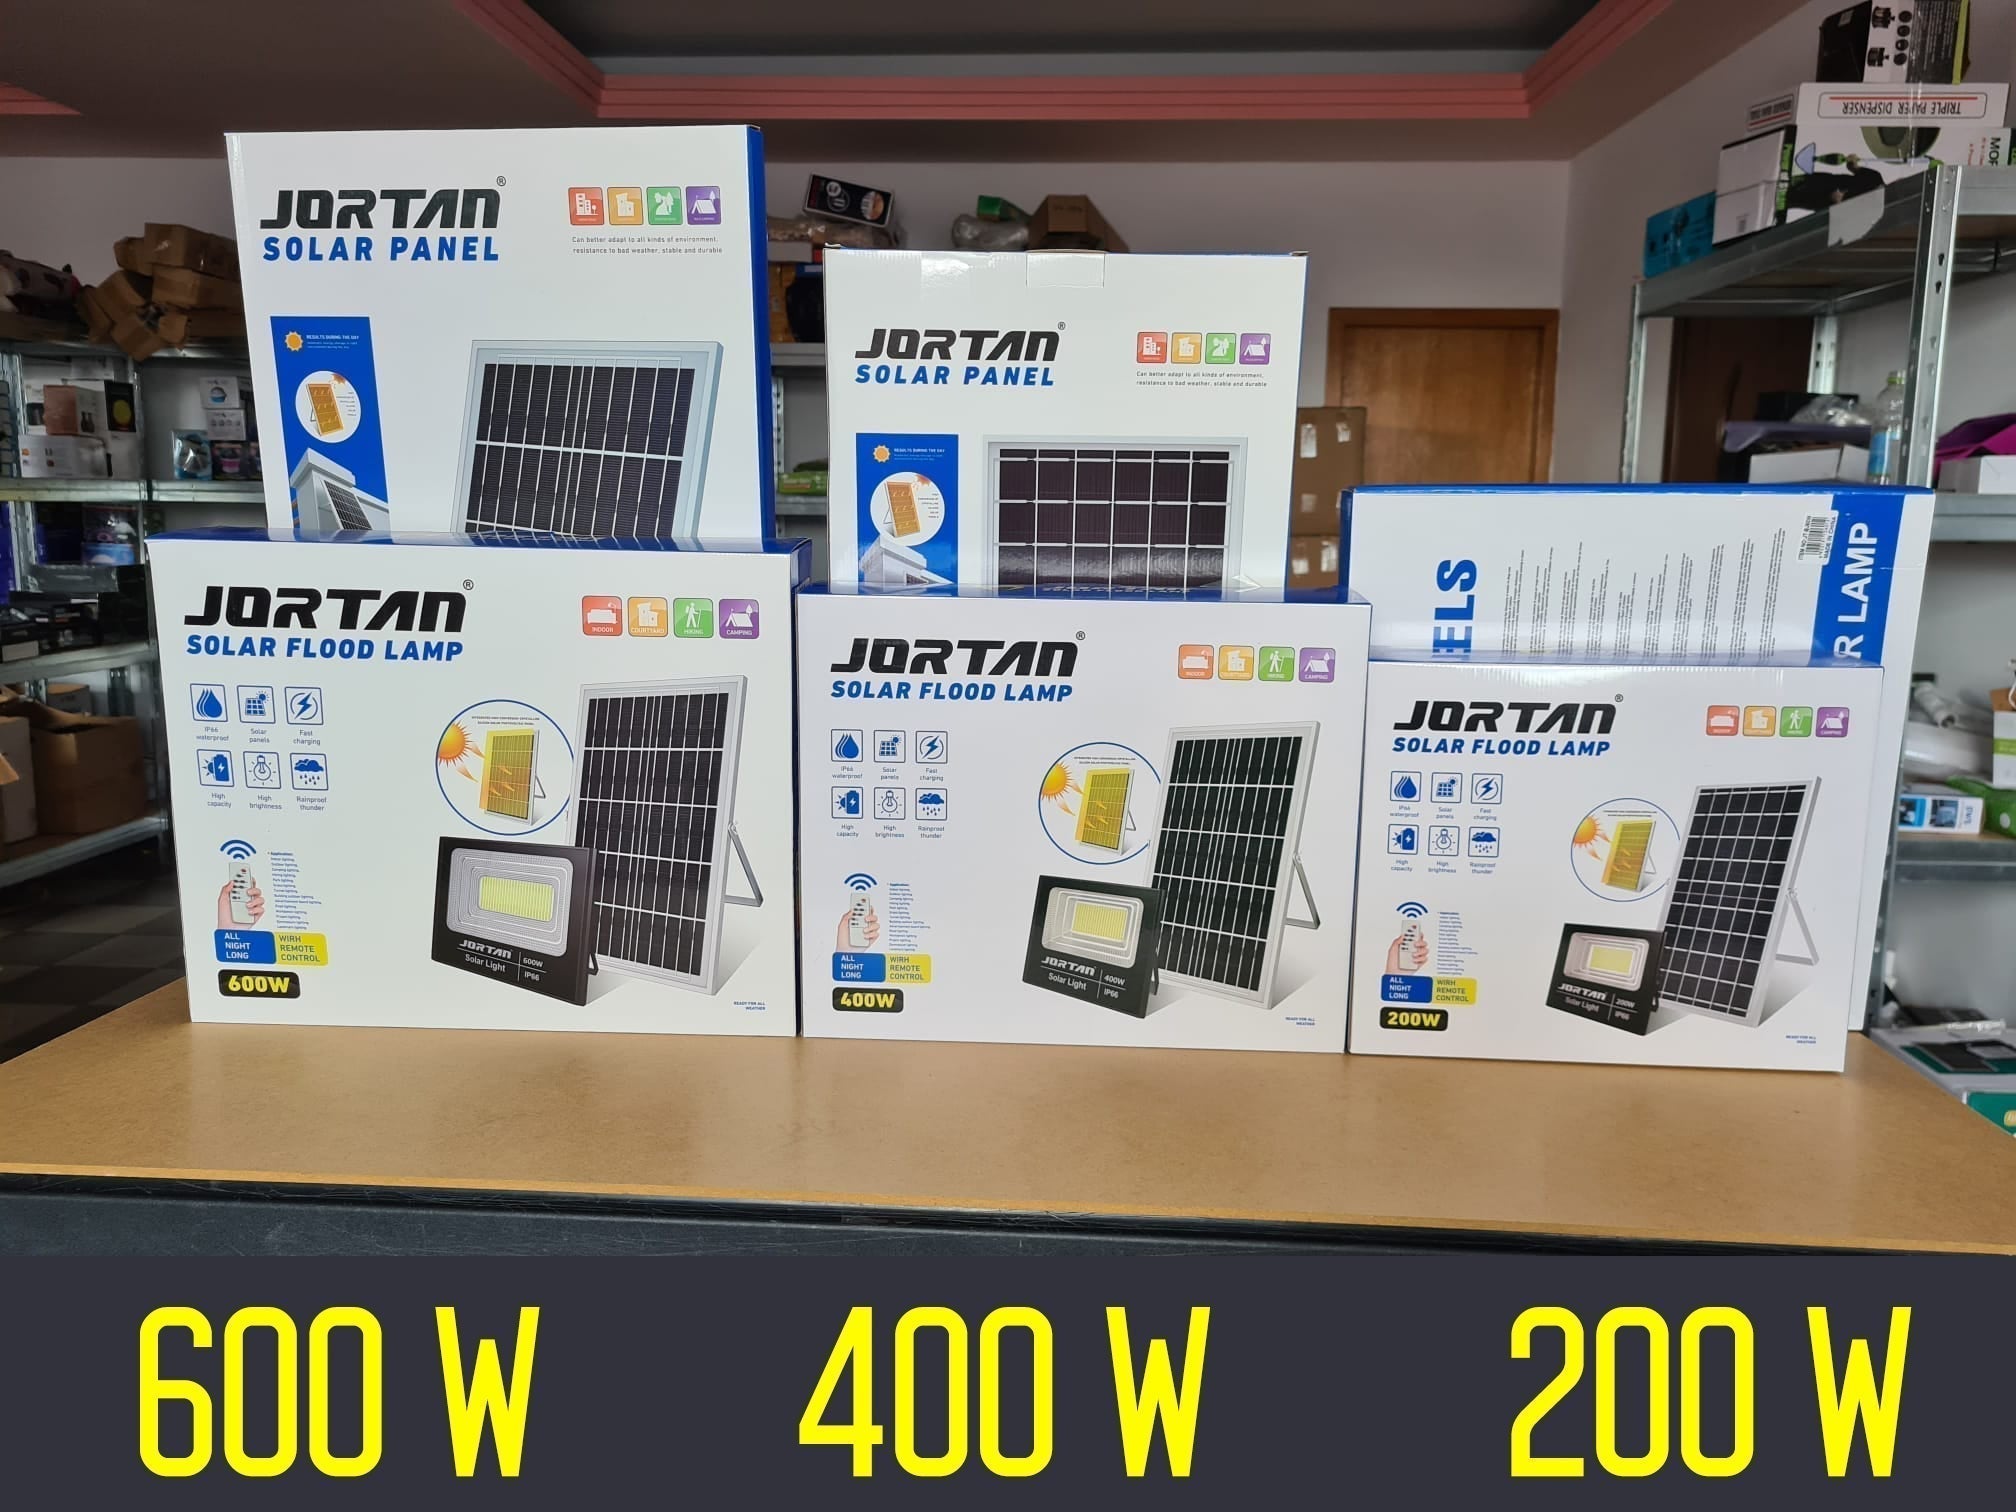 Proiector Jon Solar 400W, Lampa Incarcare Solara cu Panou Solar separat